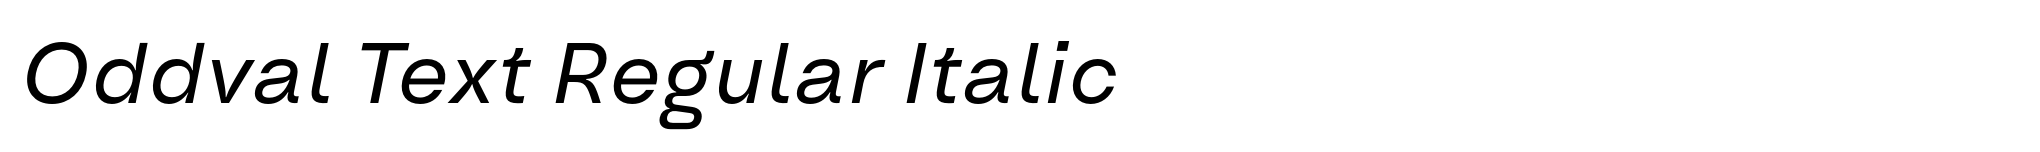 Oddval Text Regular Italic image